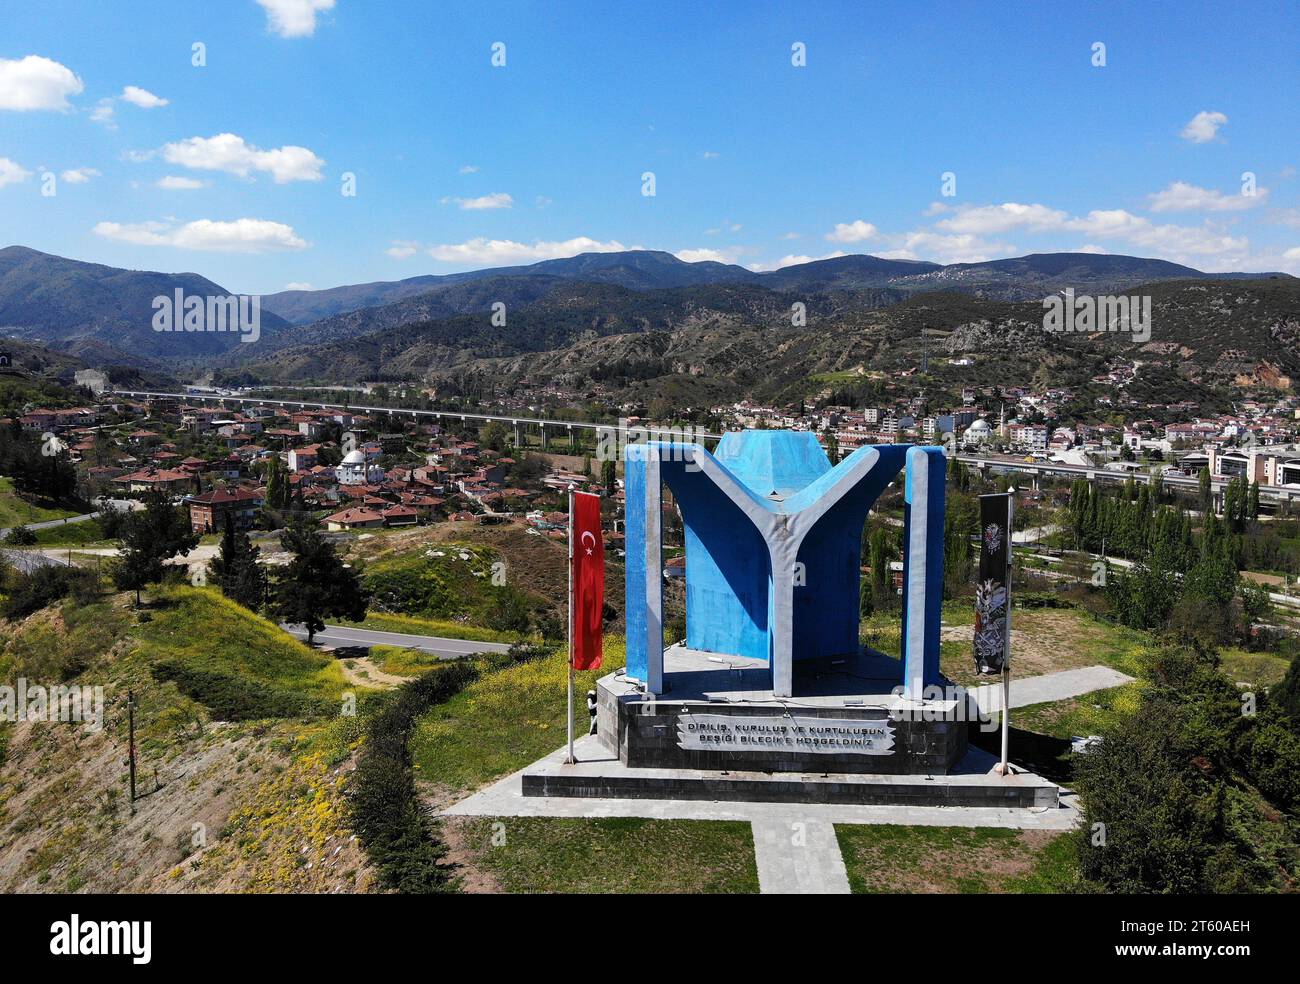 Kayi Boyu Monument in Bilecik, Turkey Stock Photo